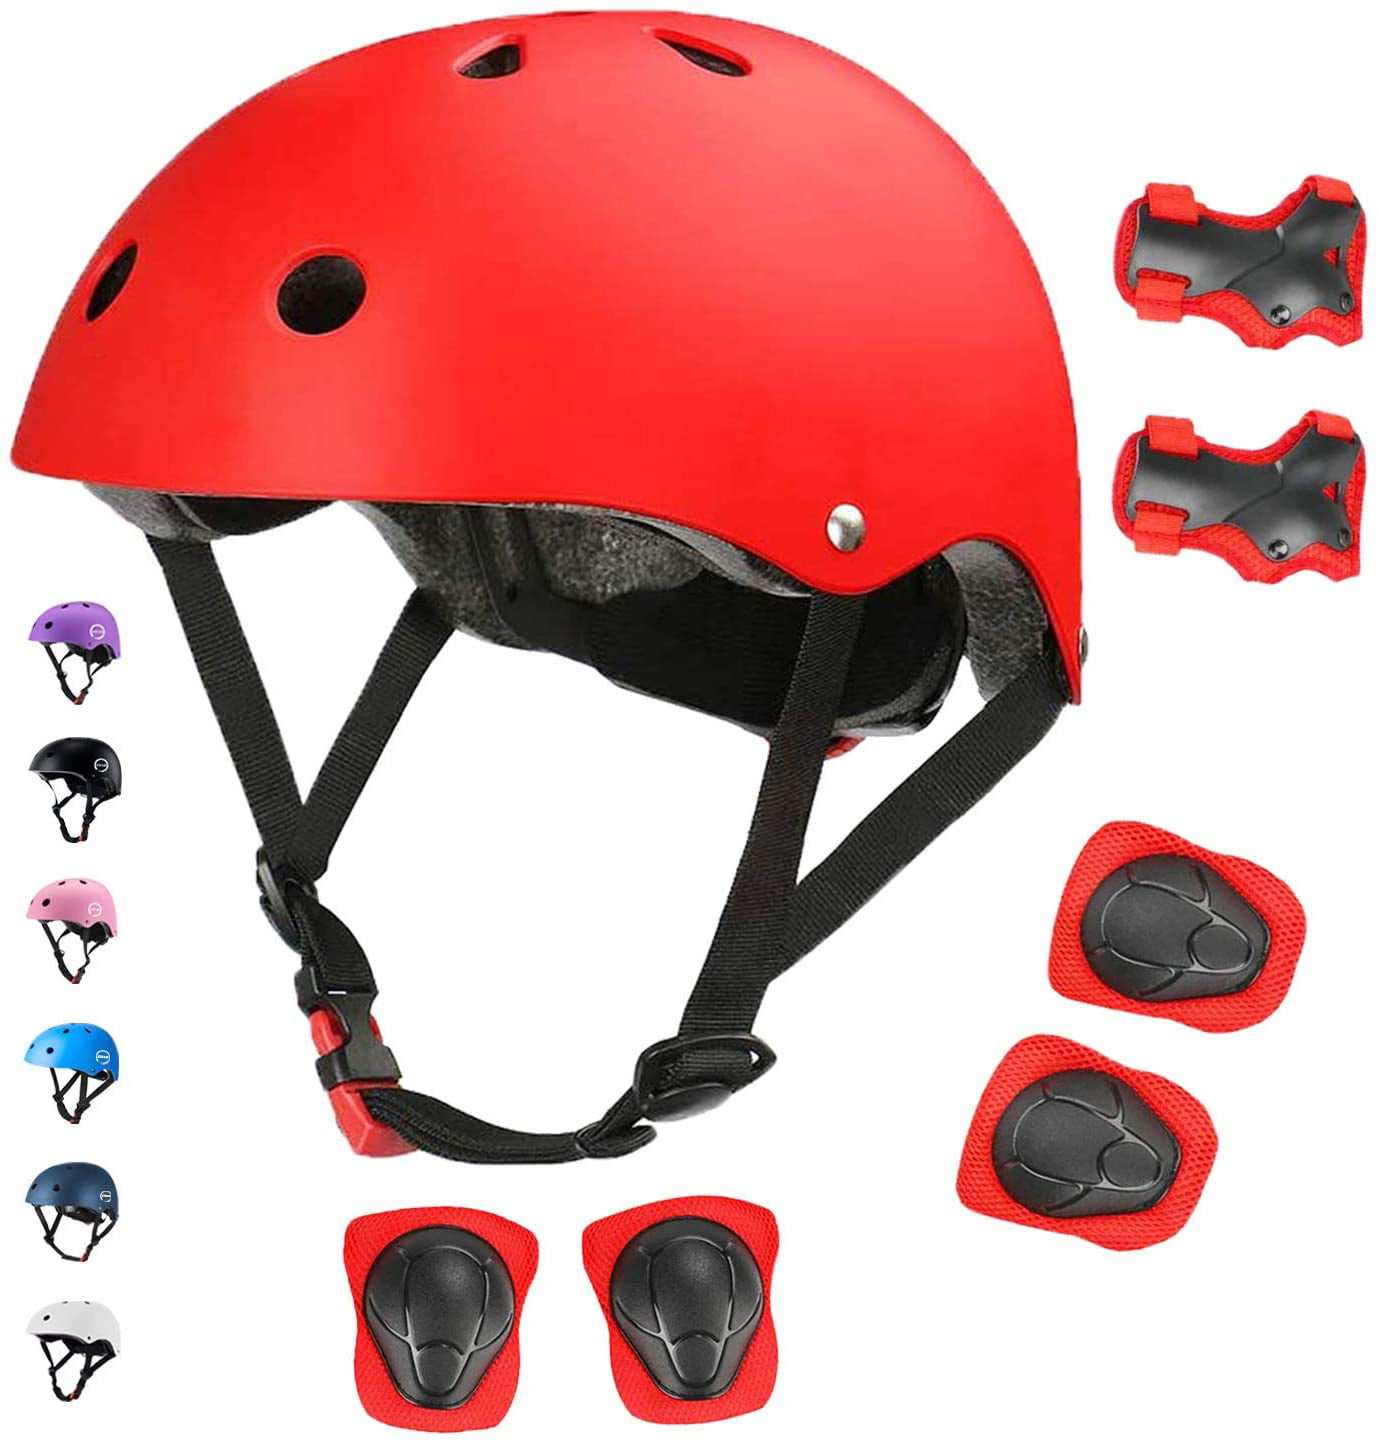 7Set Boys Girls Kids Safety Helmet&Knee&Elbow&Wrist Pad For Cycling Skate Bike